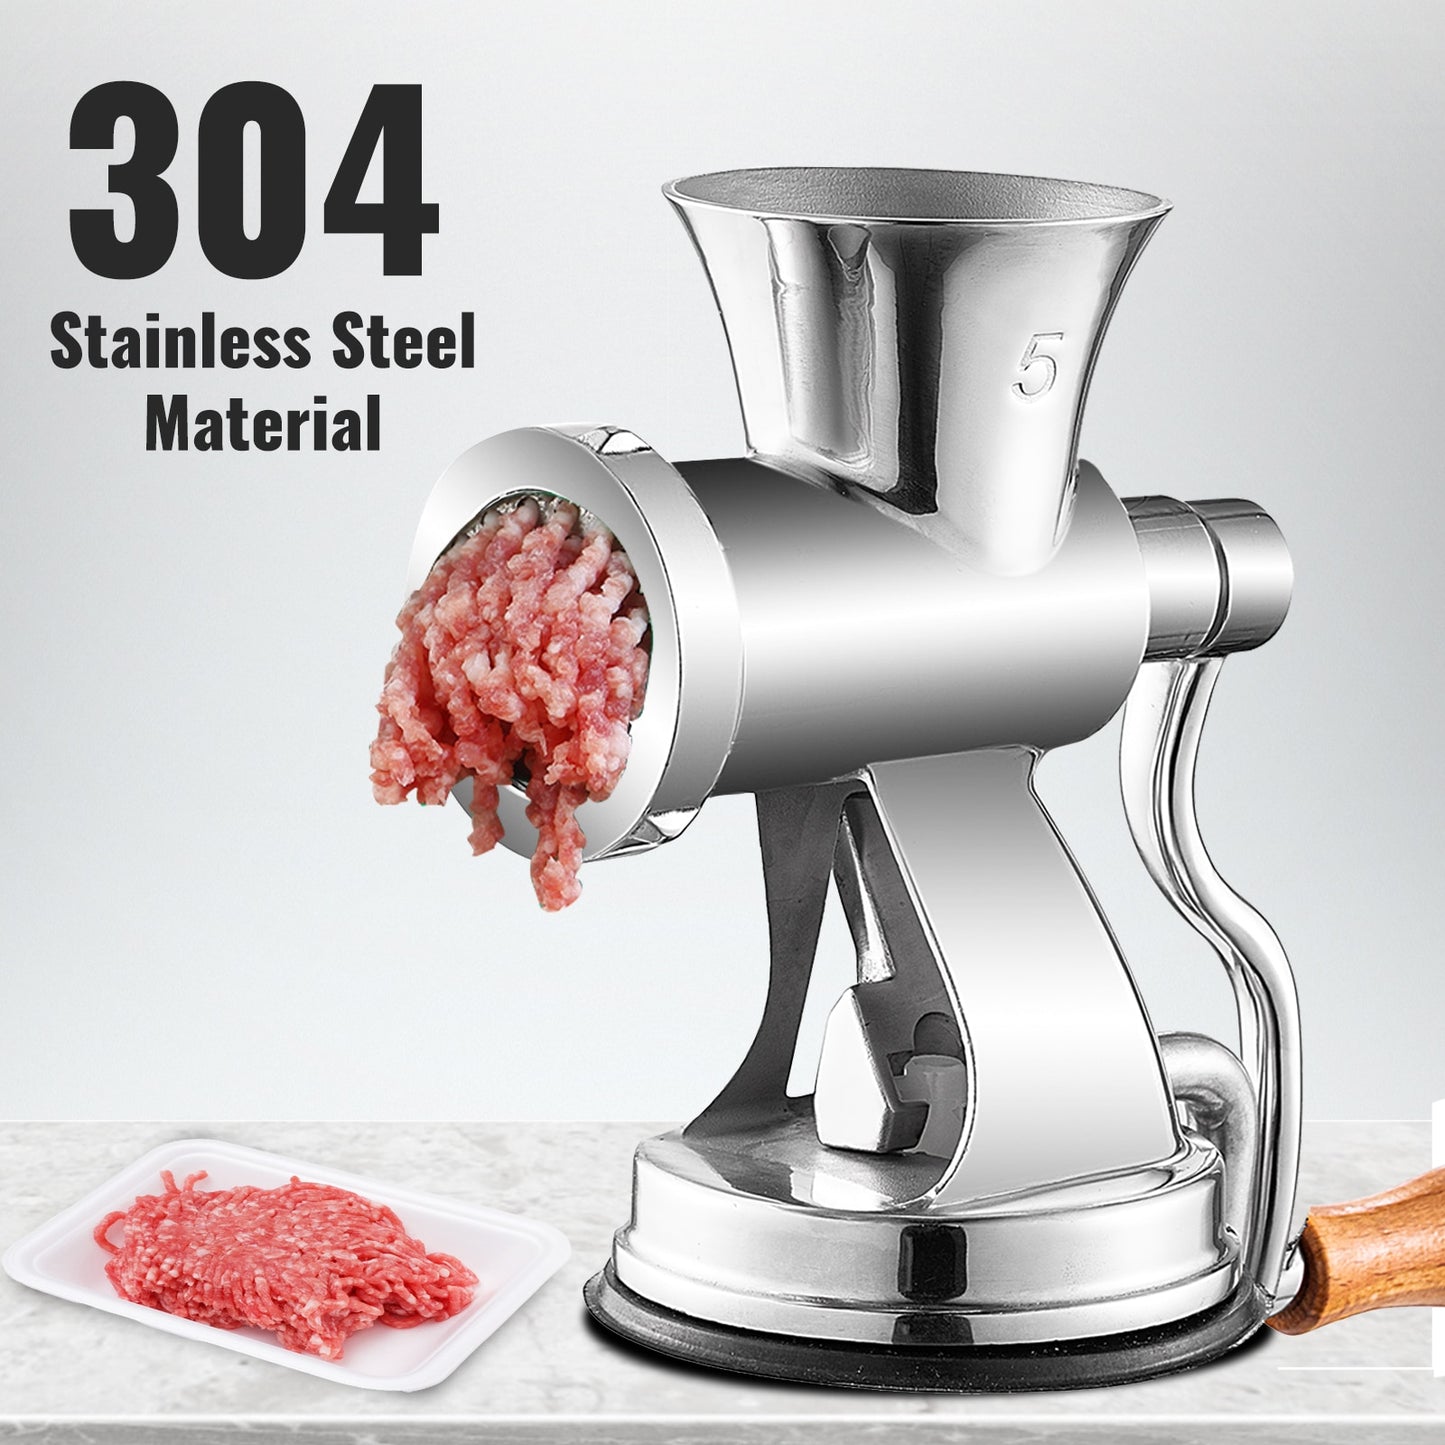 VEVOR Hand Operated Meat Grinder Multifunctional Kitchen Appliance 304 Stainless Steel Home Manual Sausage Stuffer Mincer Maker